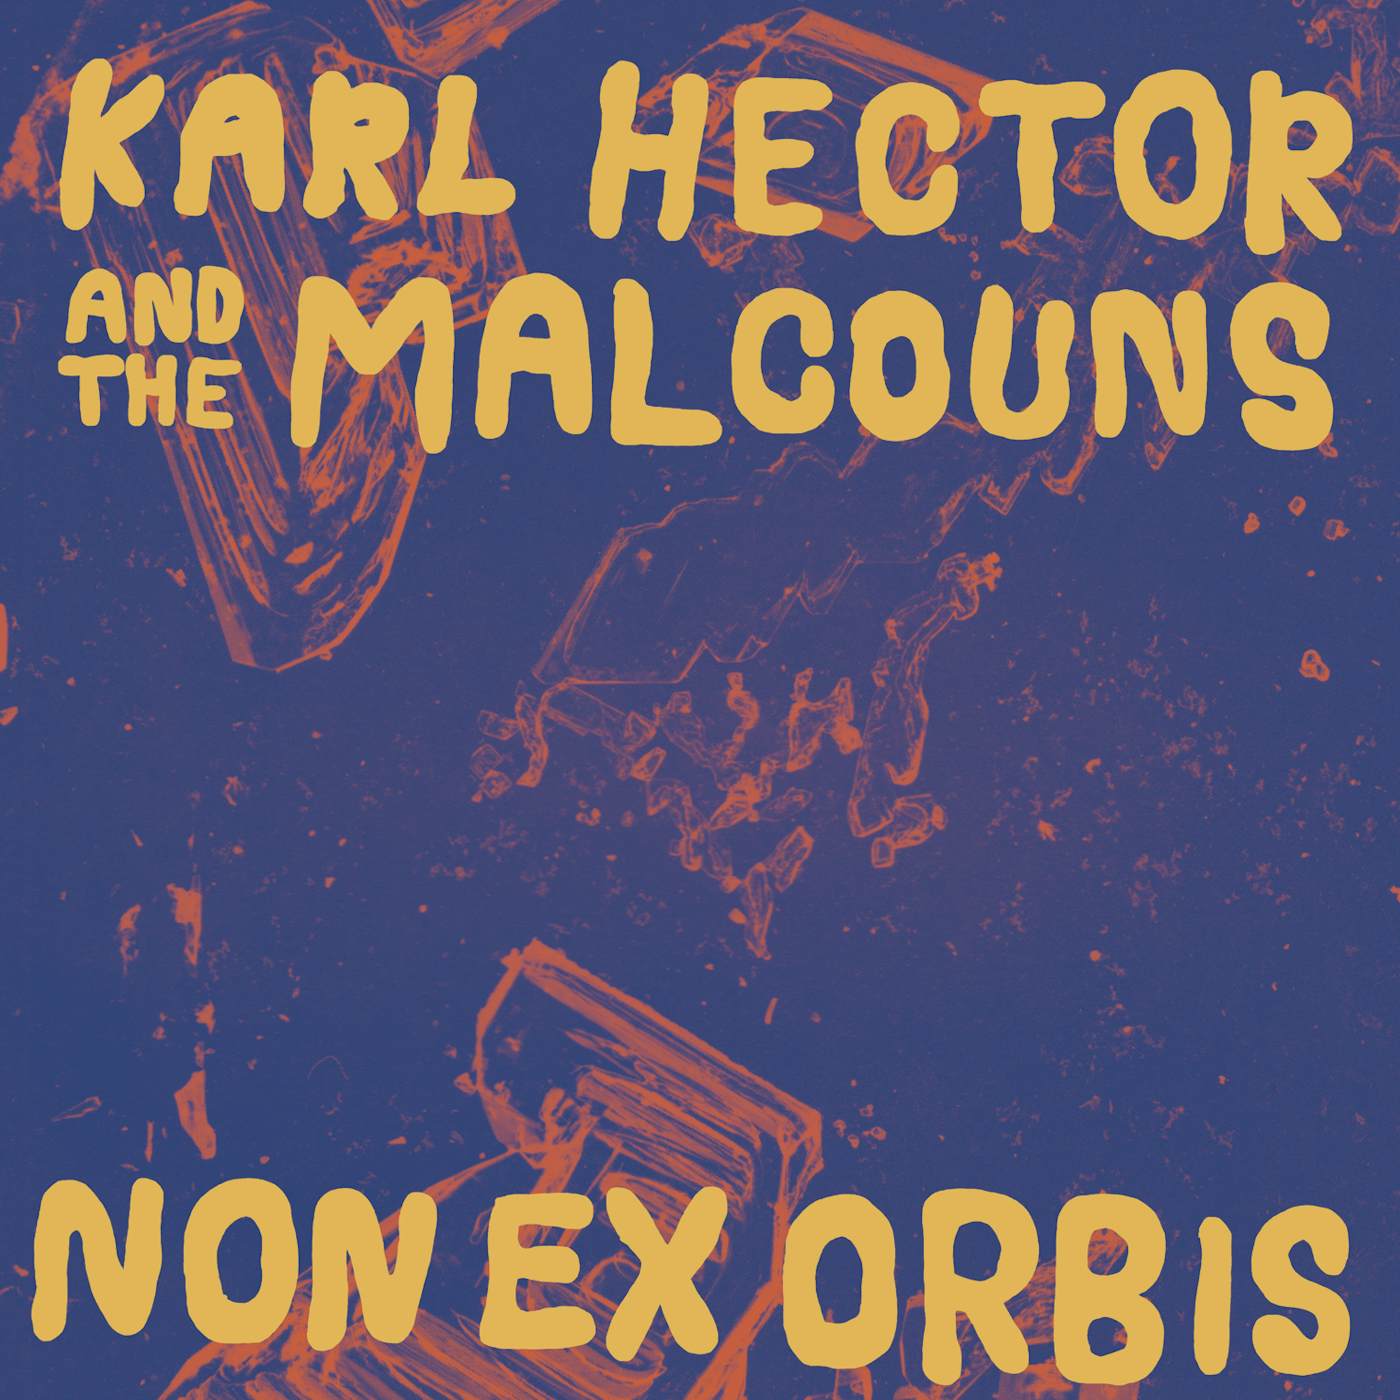 Karl Hector NON EX ORBIS CD